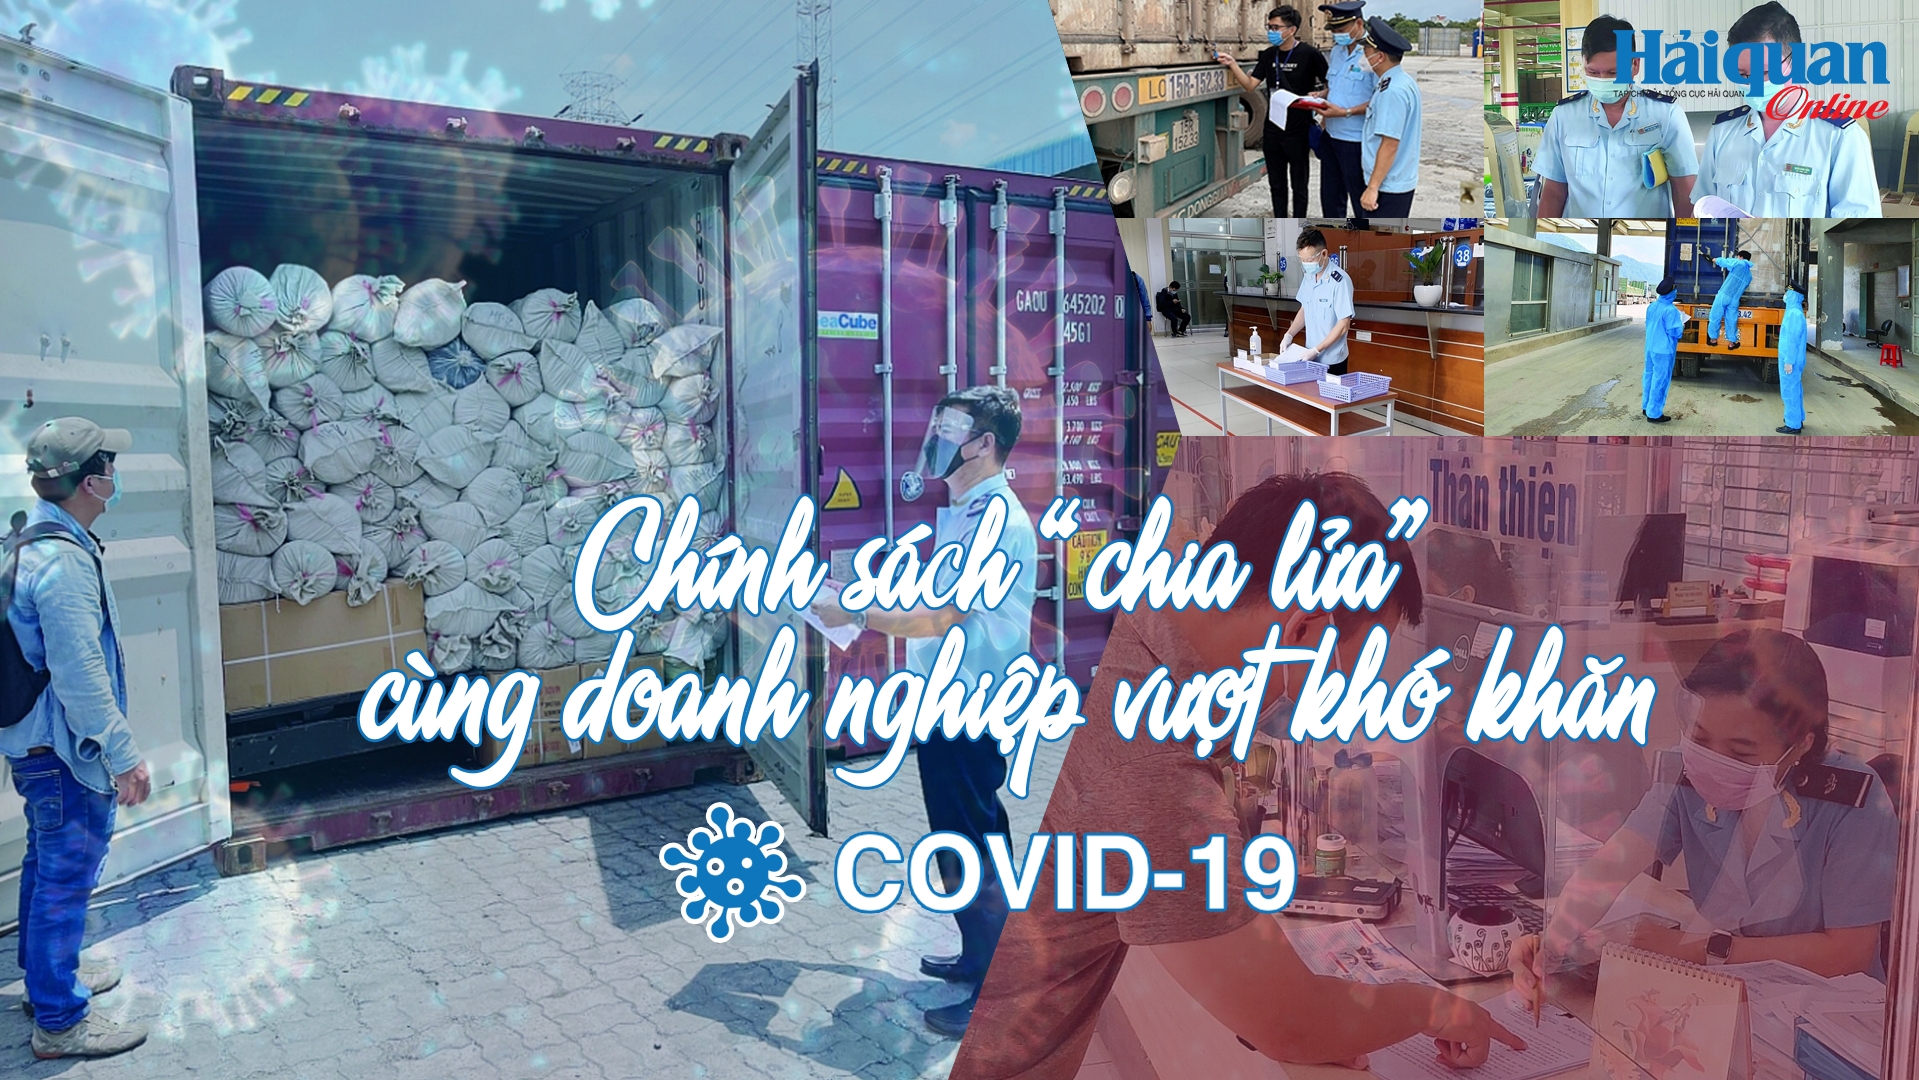 megastory chinh sach chia lua cung doanh nghiep vuot kho khan covid 19